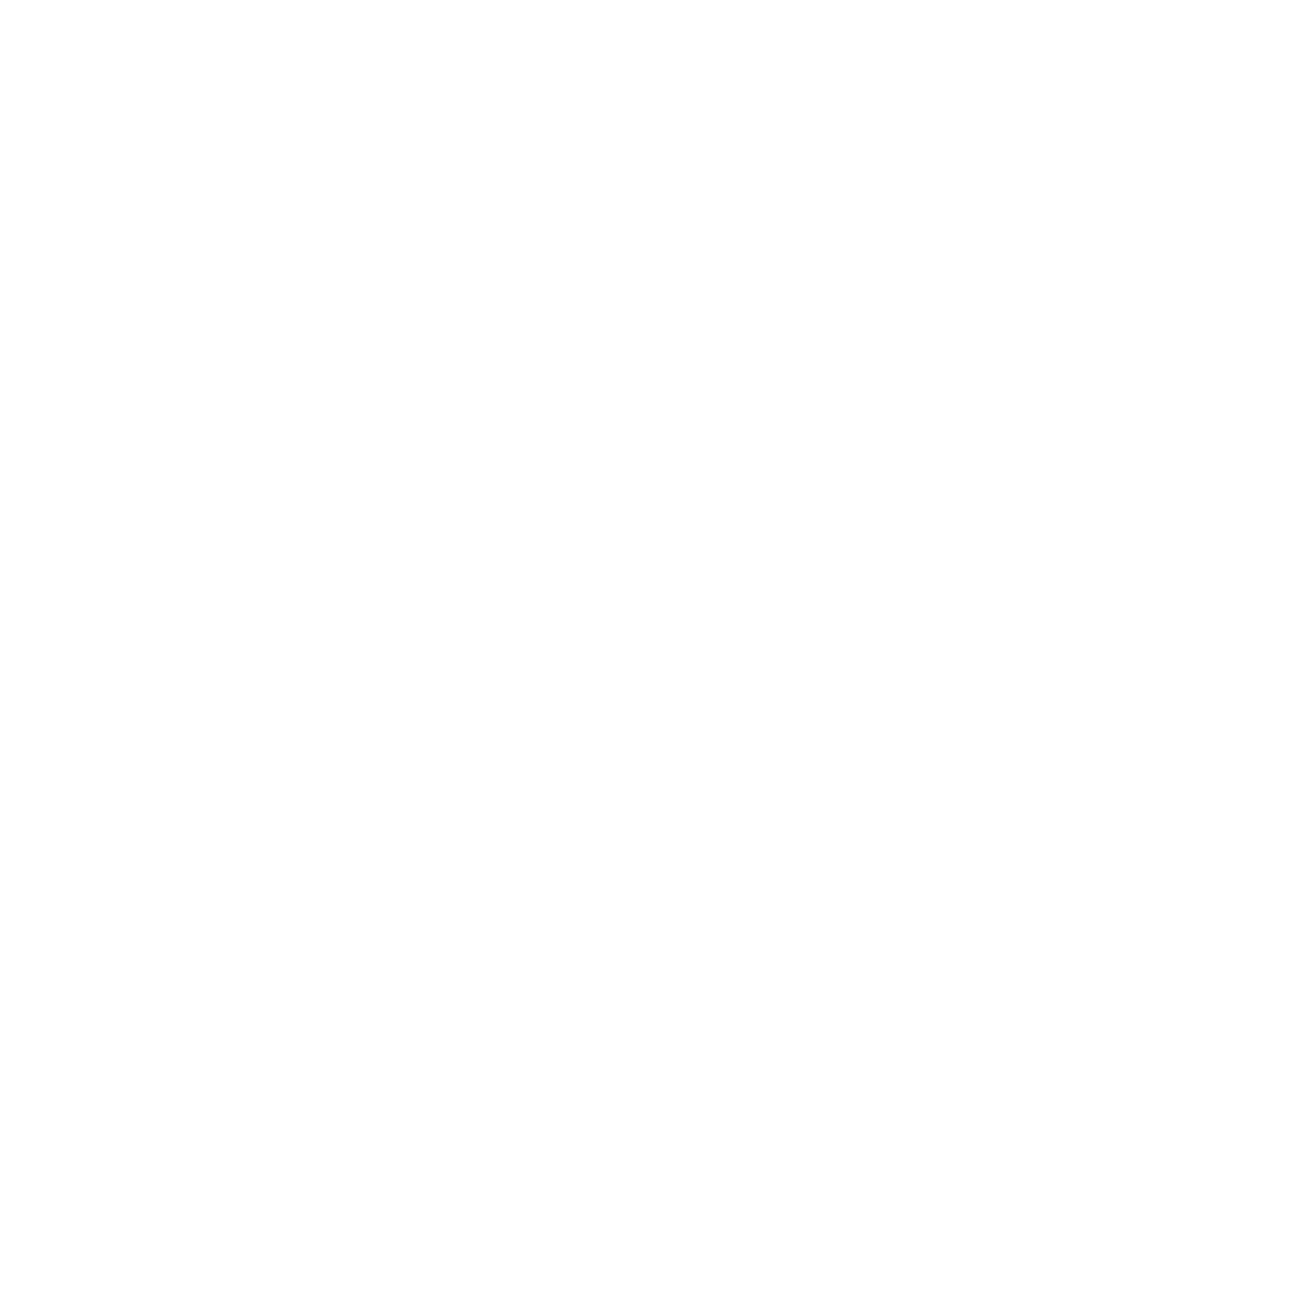 NRG Media